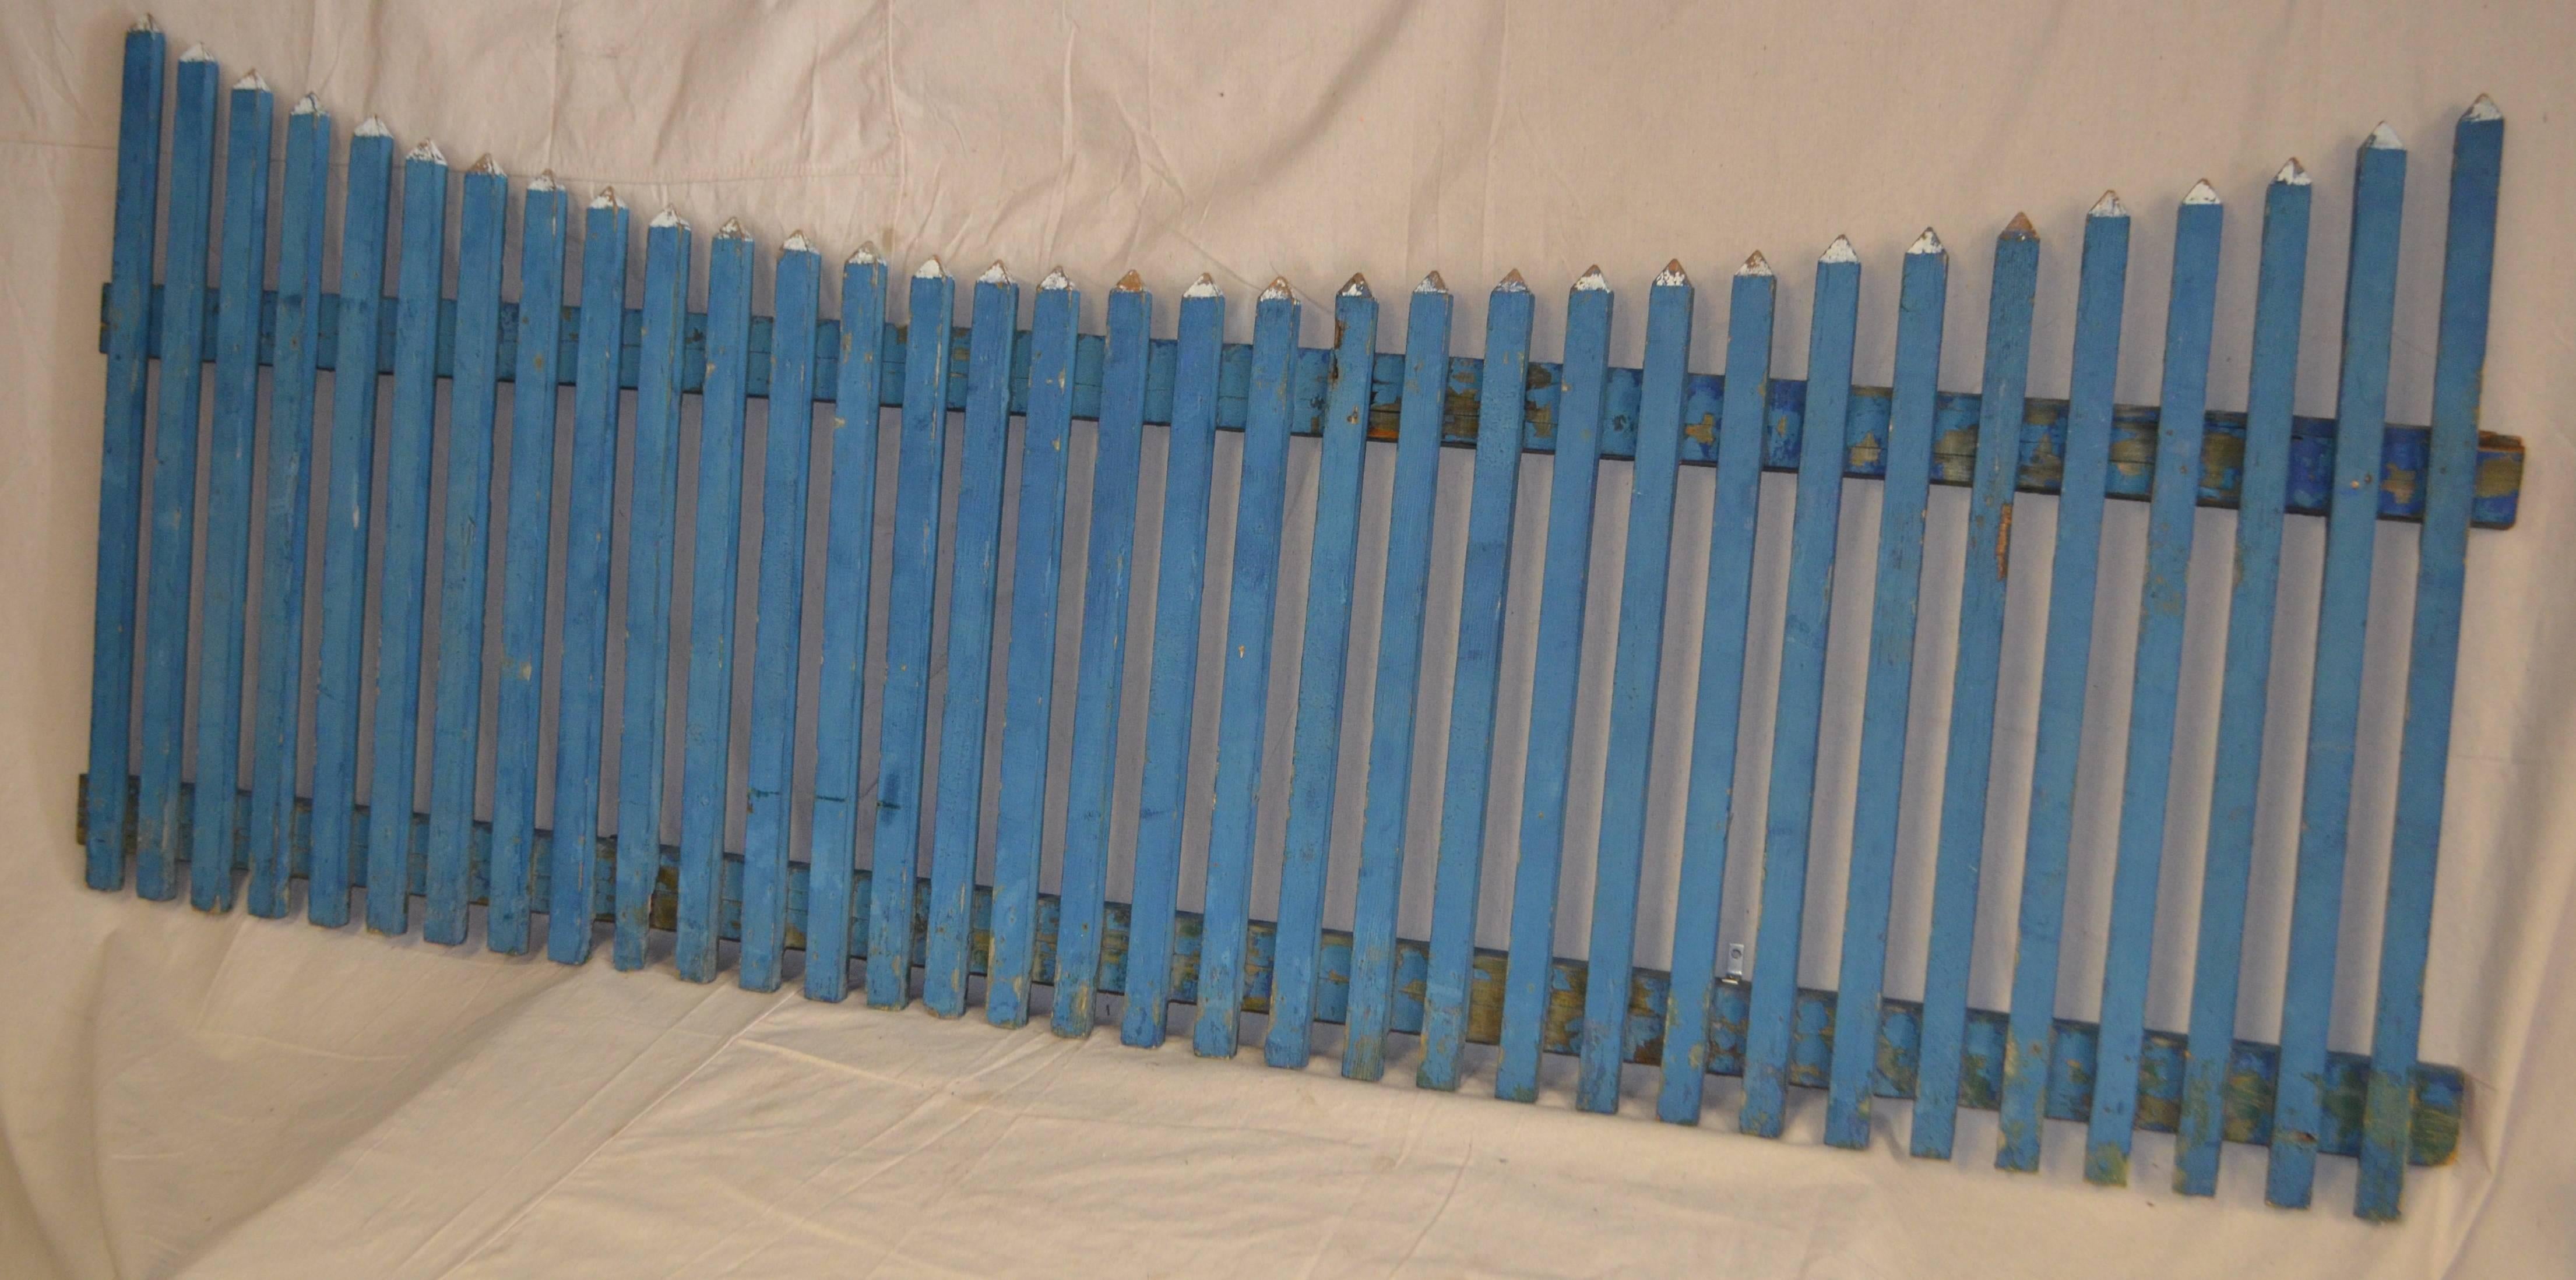 Adirondack Garden Picket Fence in Original Blue Paint.